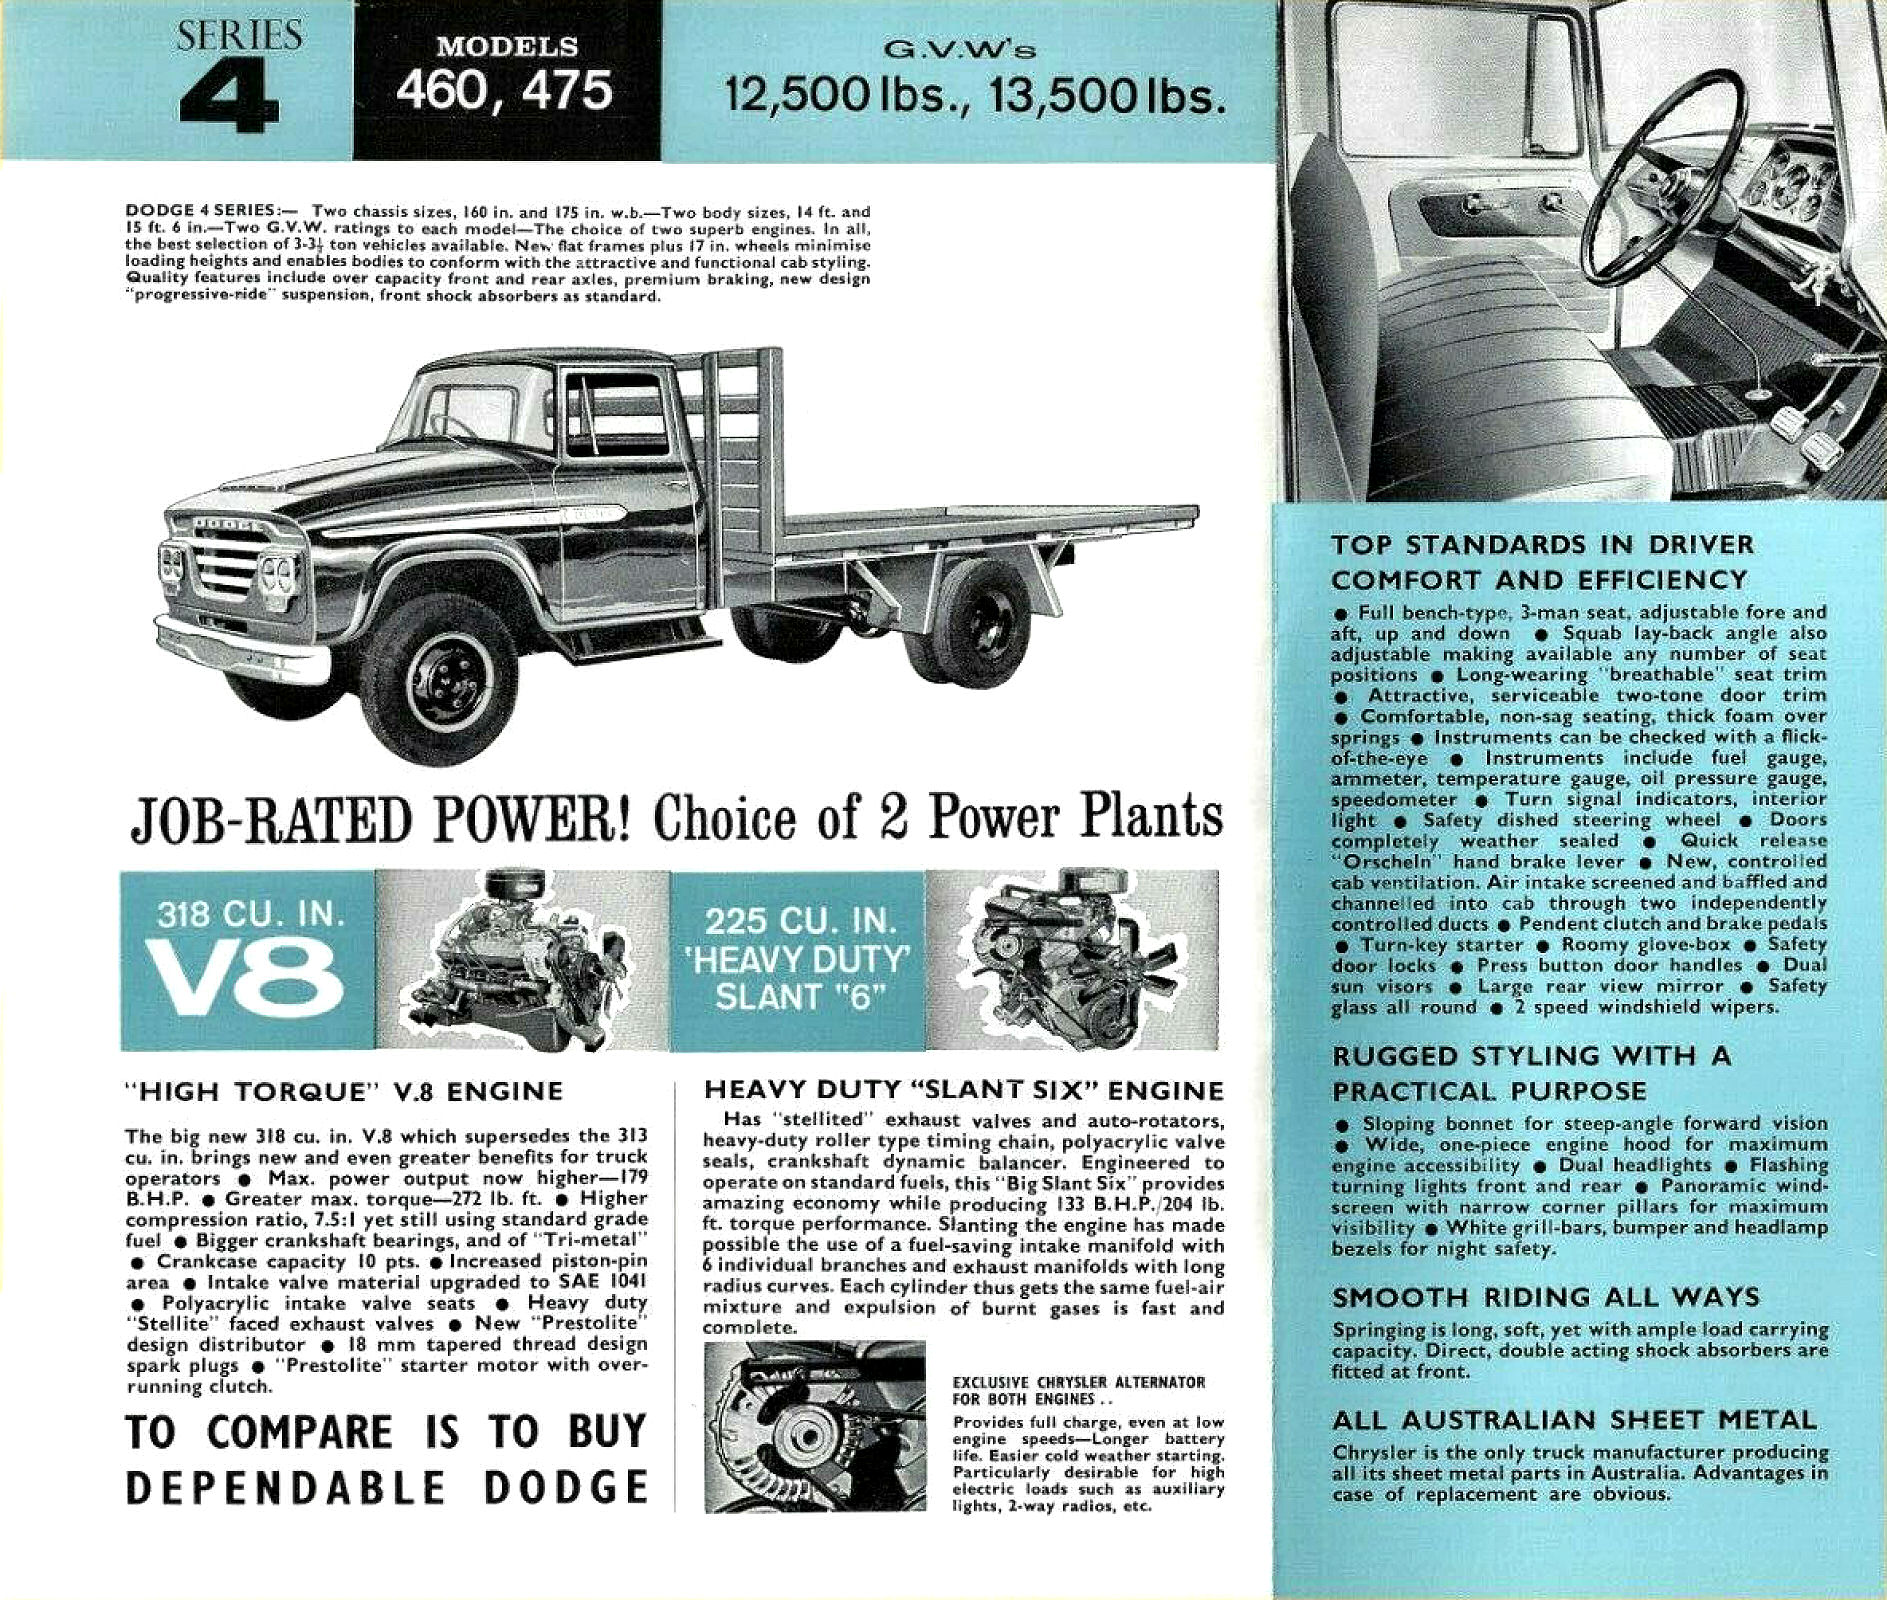 1963 Dodge Series 4 Trucks (Aus)-01b